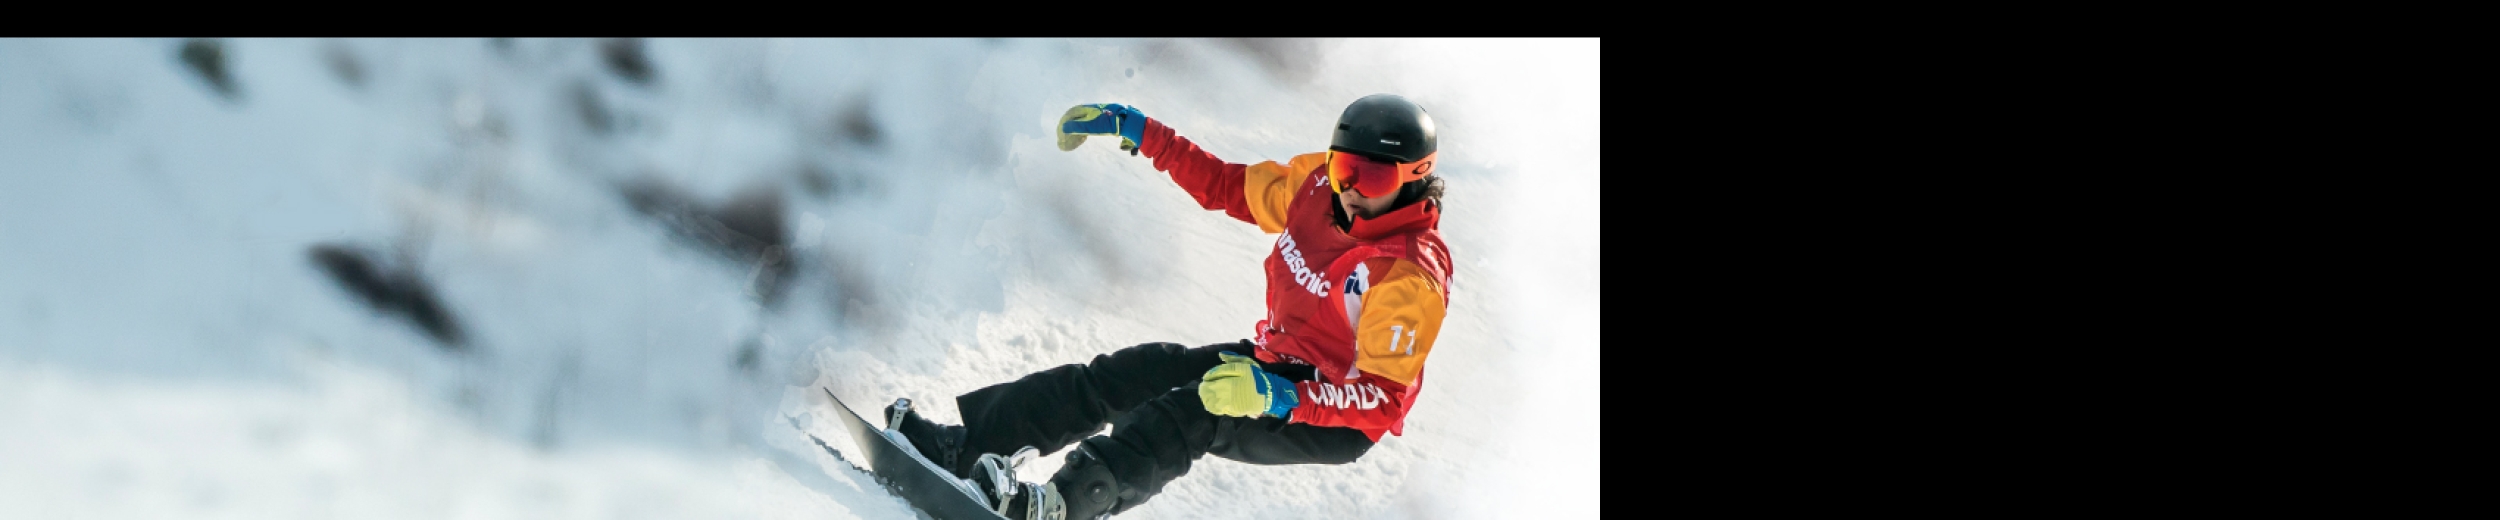 Sandrine Hamel snowboarding down a mountain 